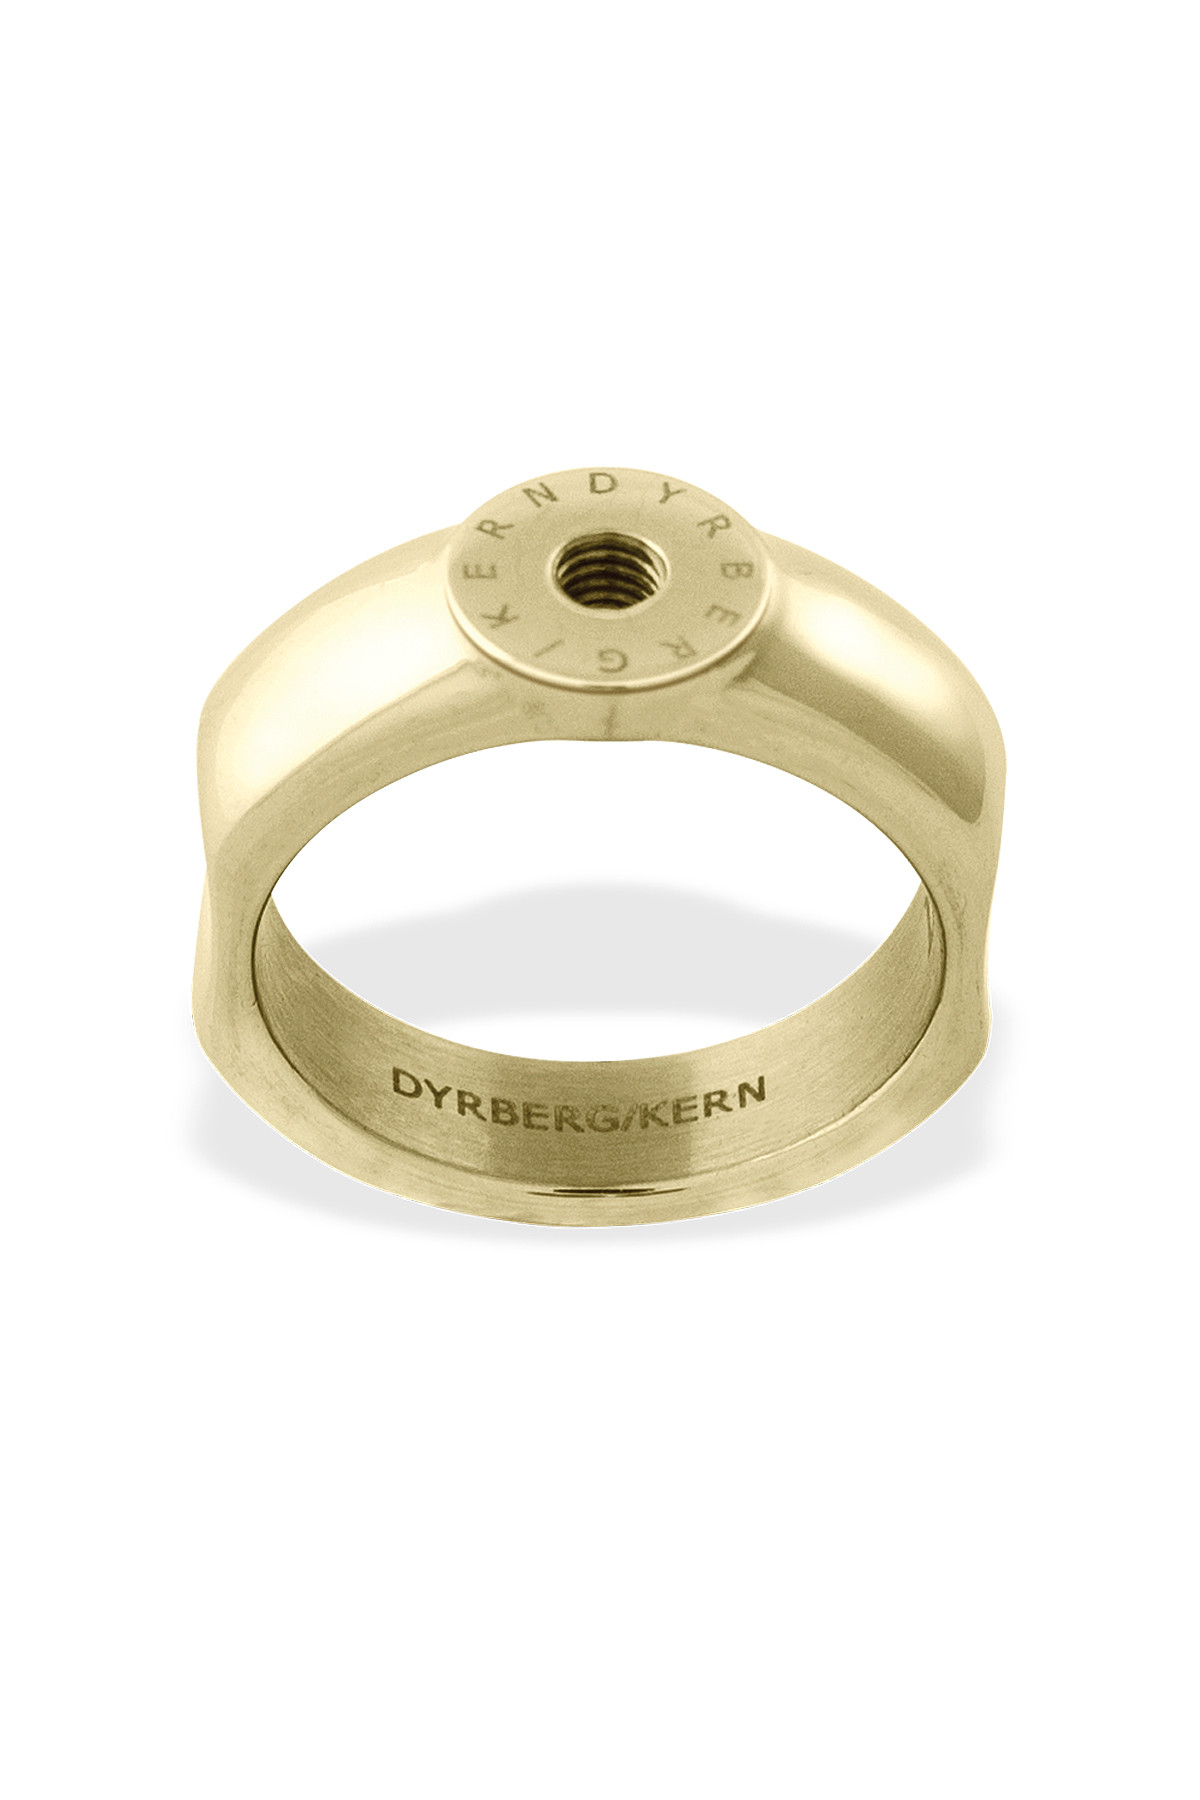 DYRBERG/KERN RING 1 RING 343070 (Gold, IIII/60)